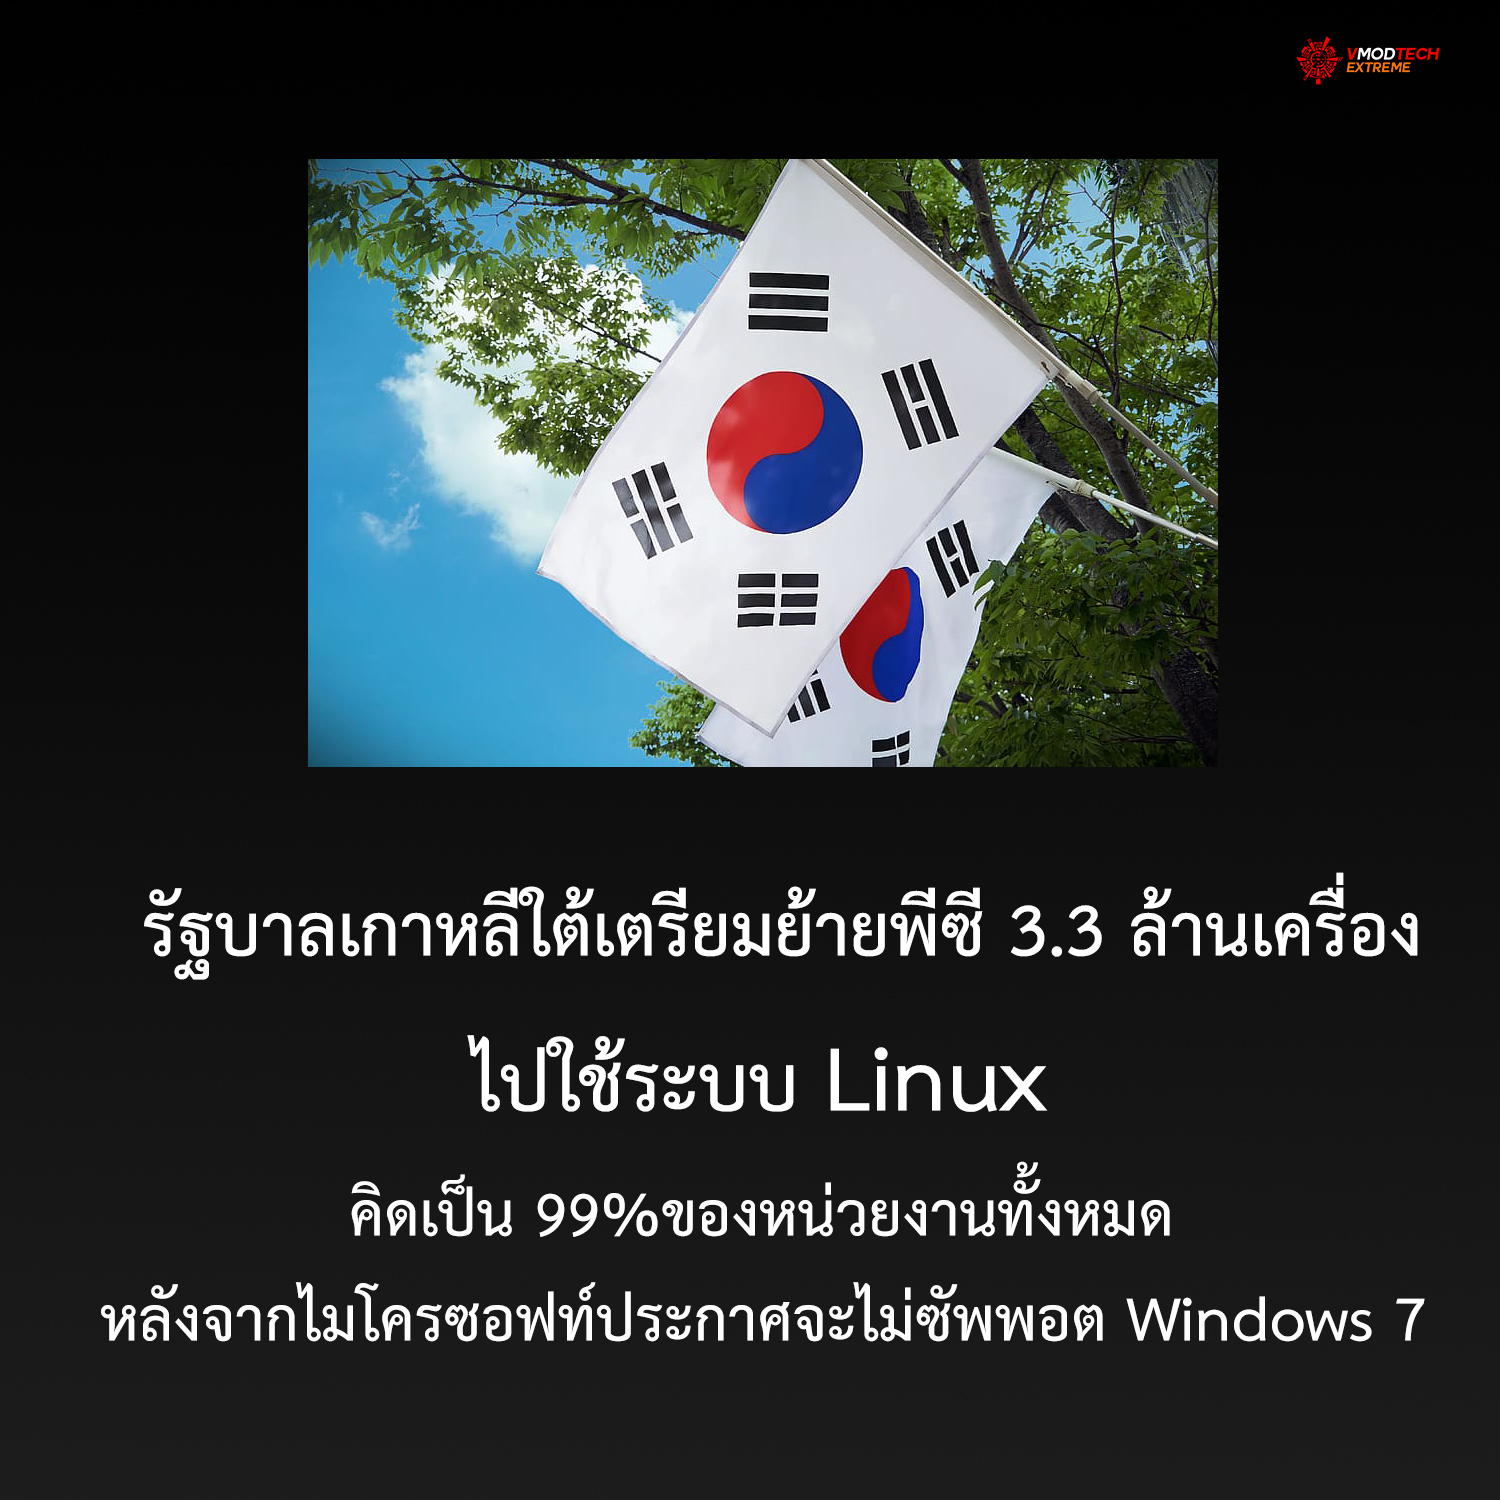 south korea linux รัฐบาลเกาหลีใต้เตรียมย้ายพีซี 3.3 ล้านเครื่องไปใช้ระบบ Linux หลังจากไมโครซอฟท์ประกาศจะไม่ซัพพอร์ต Windows 7 